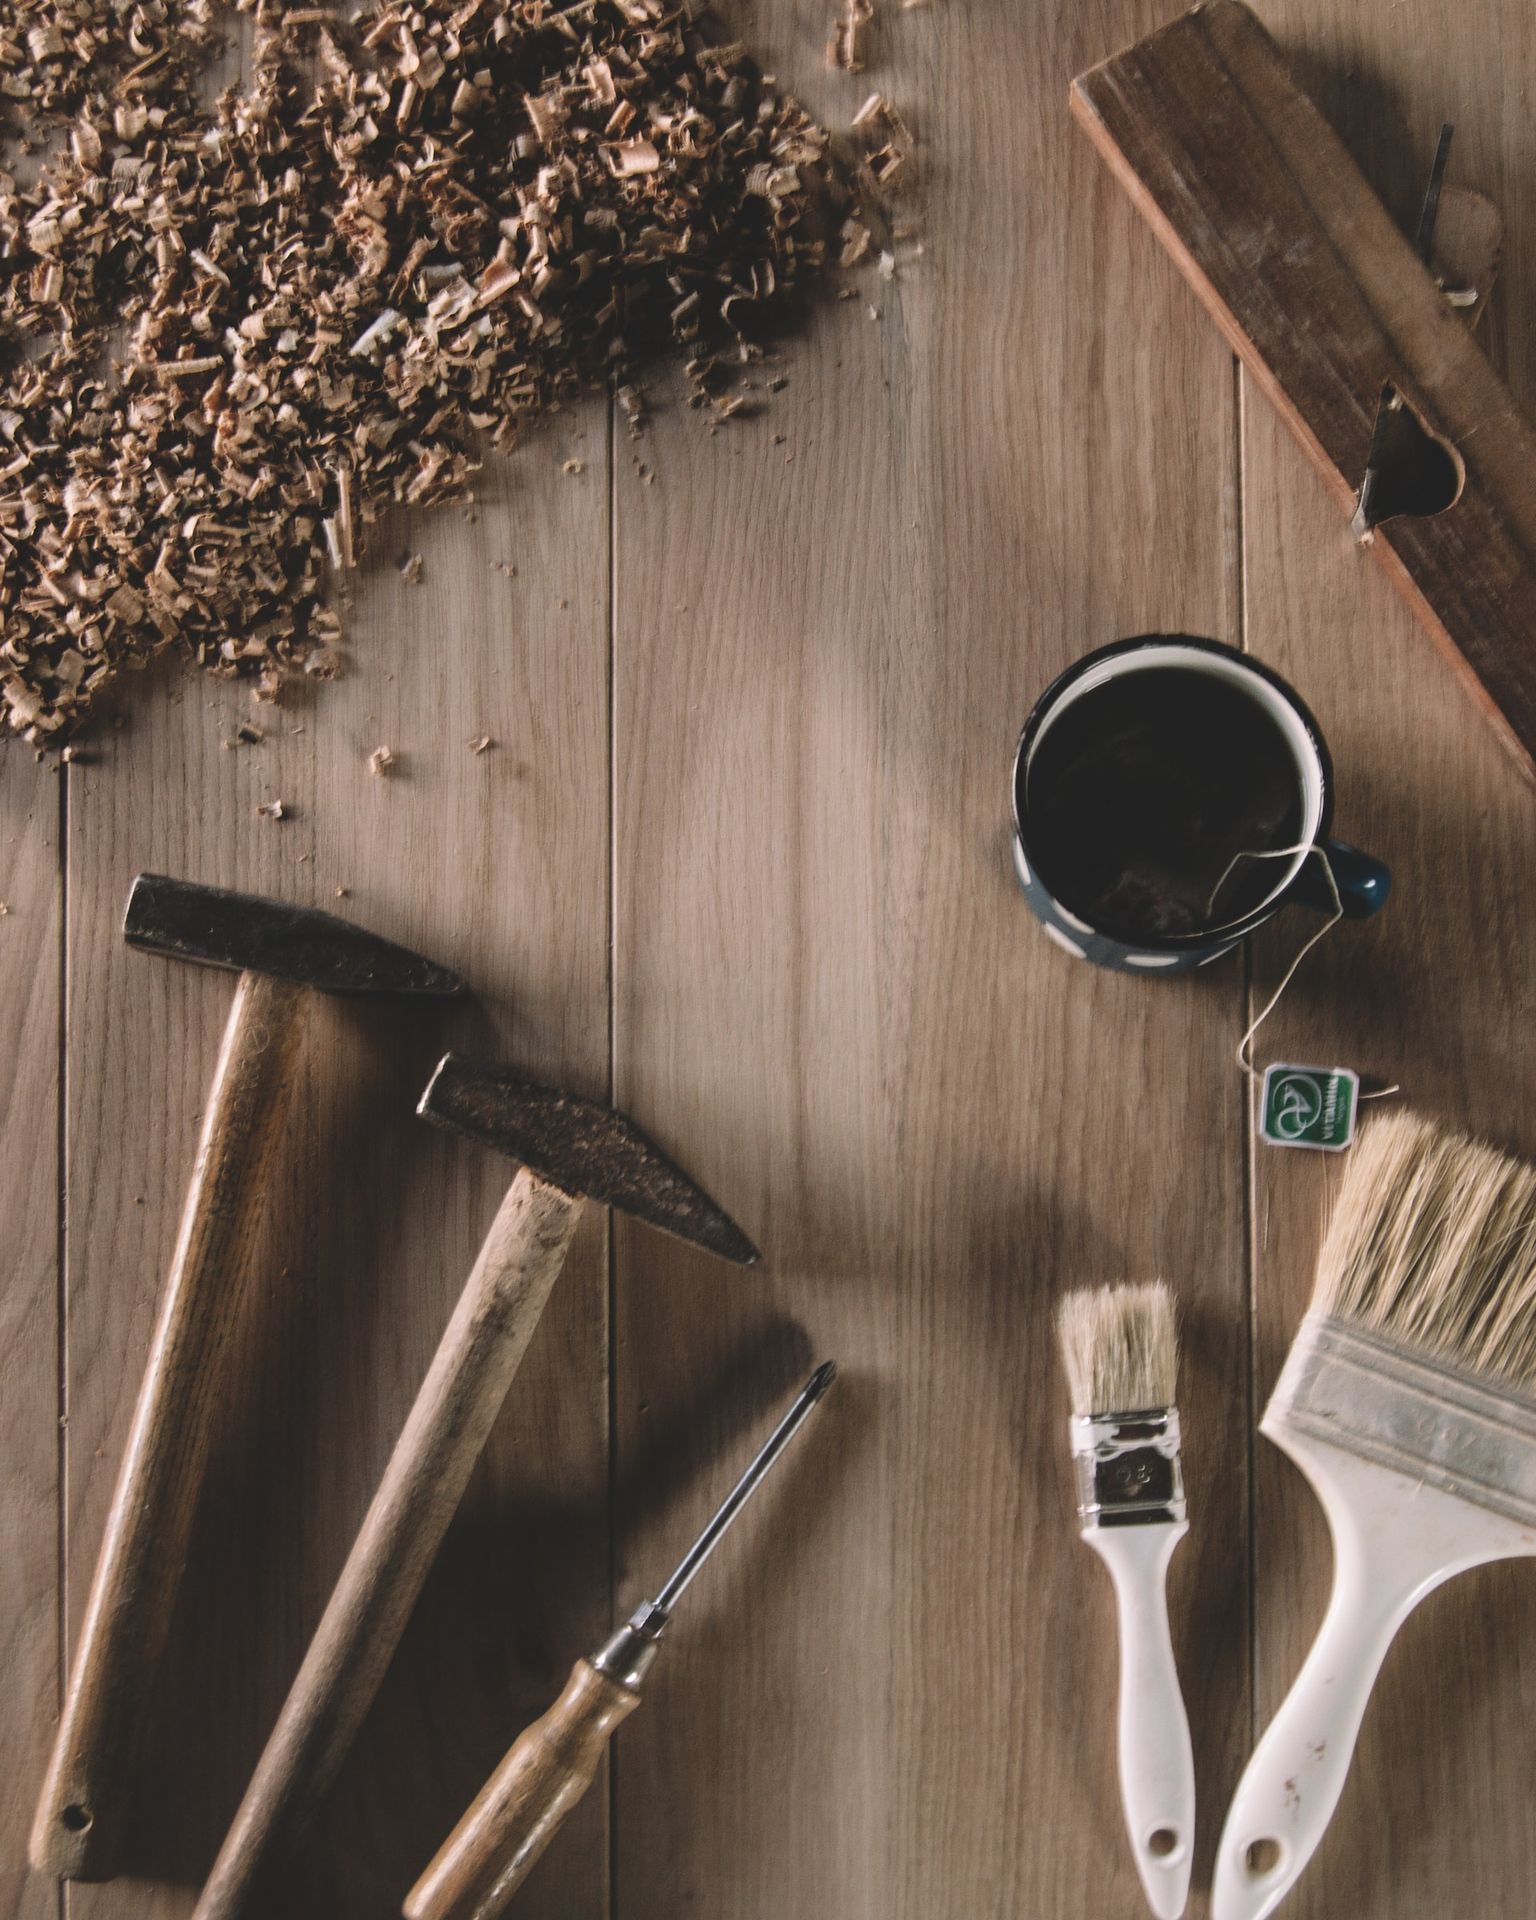 Woodwork tooling and a tea mug